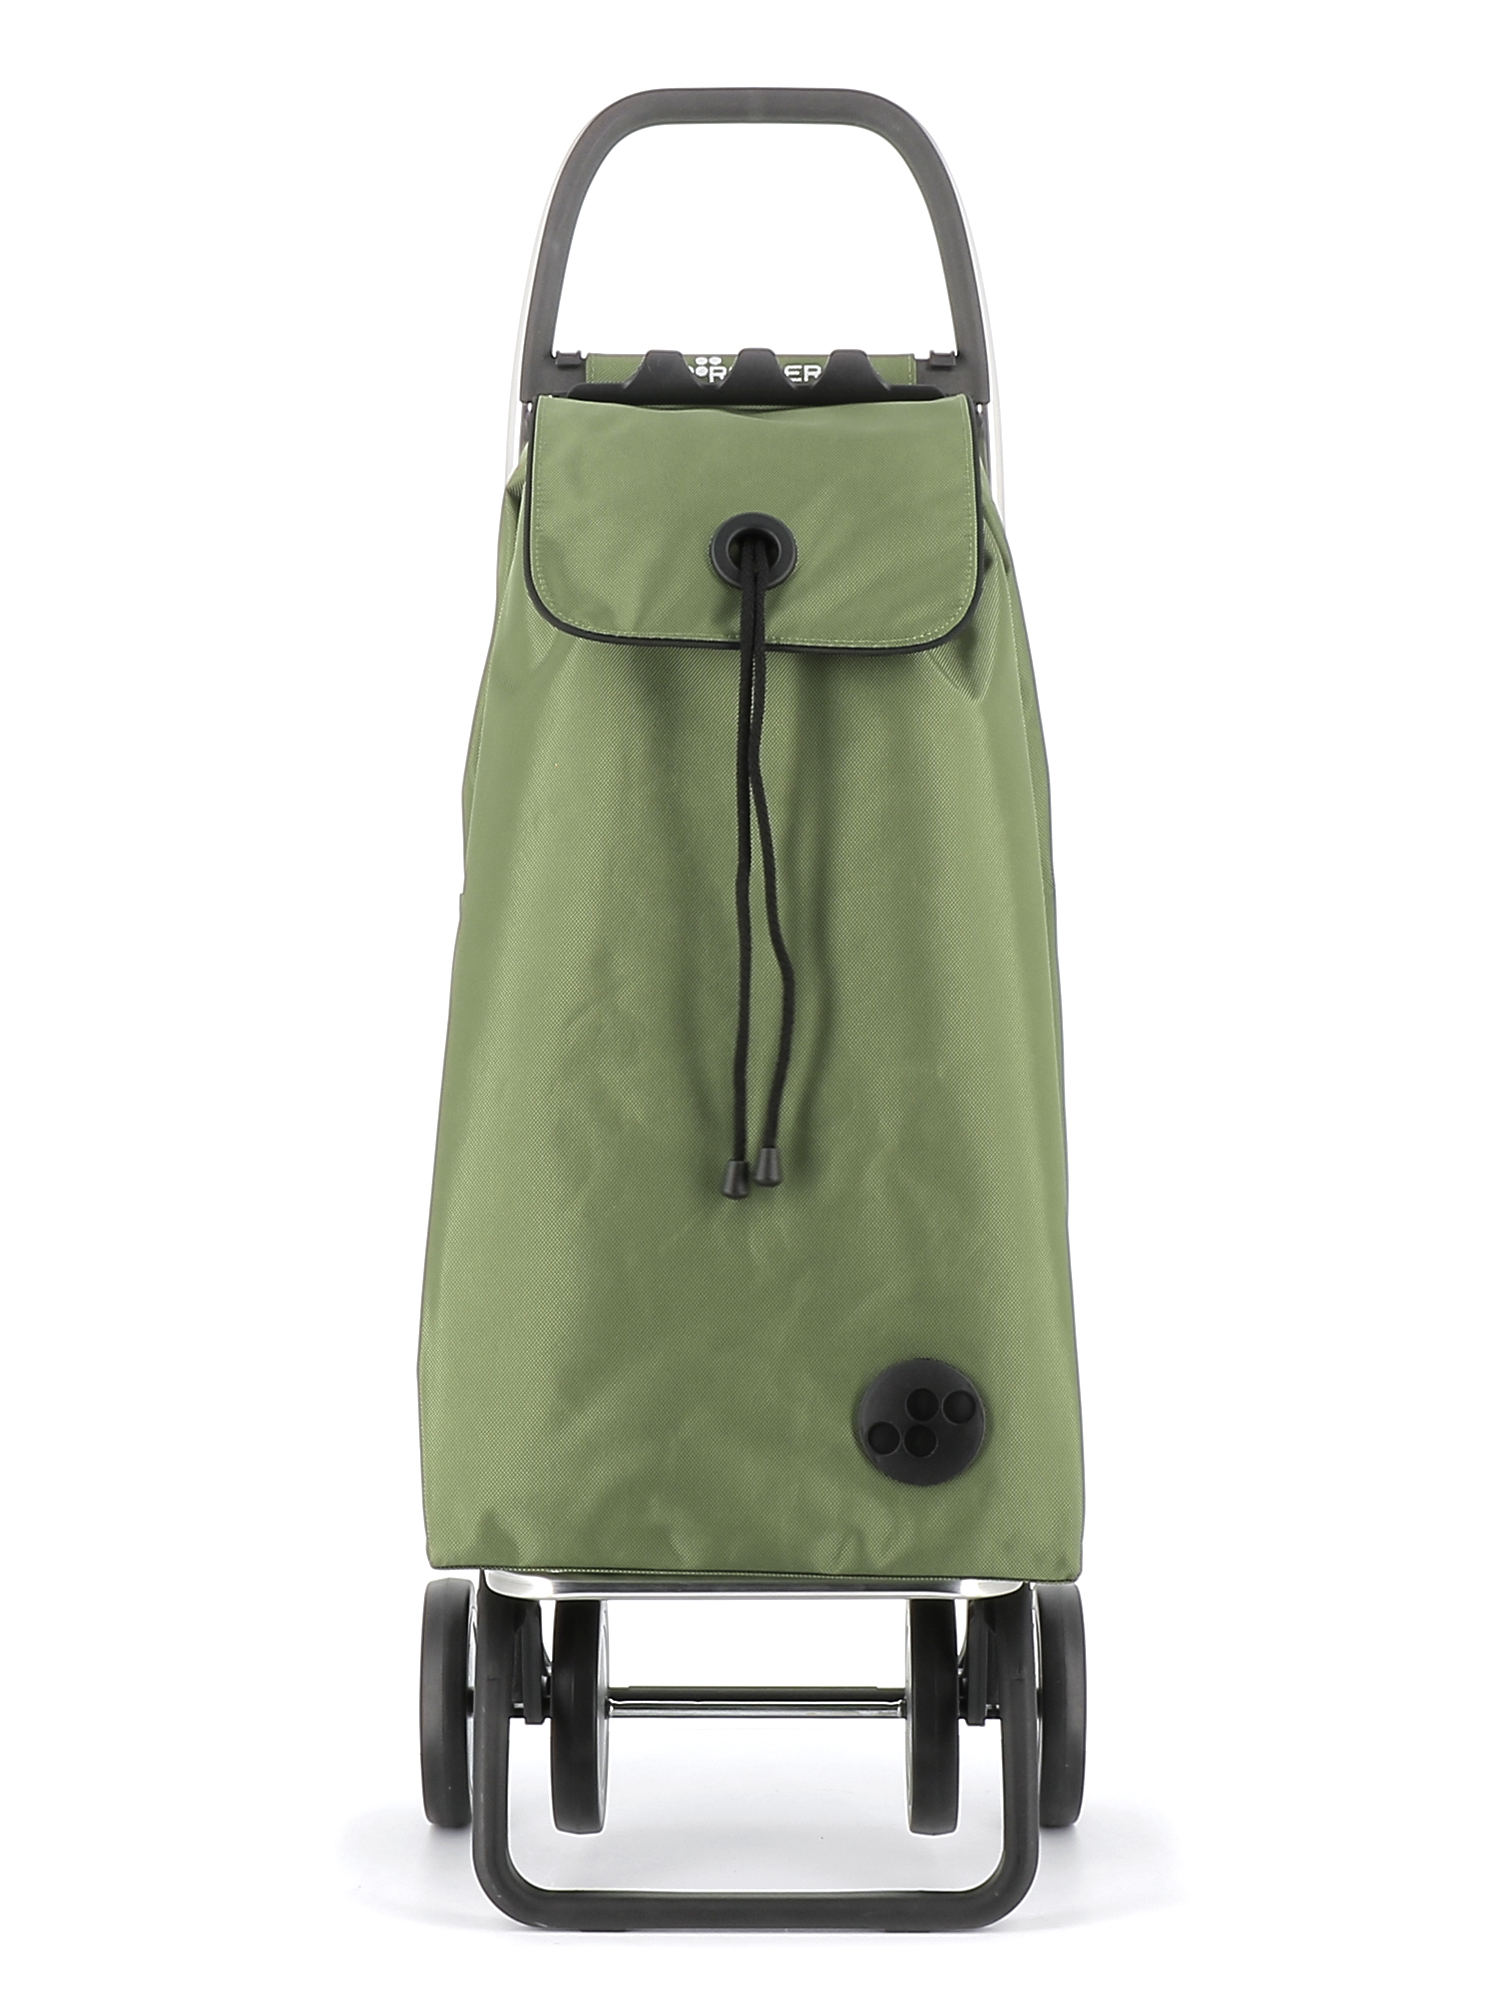 Combo Rolser I-Max MF 4 Wheel Foldable Shopping Trolley + Extra Bag